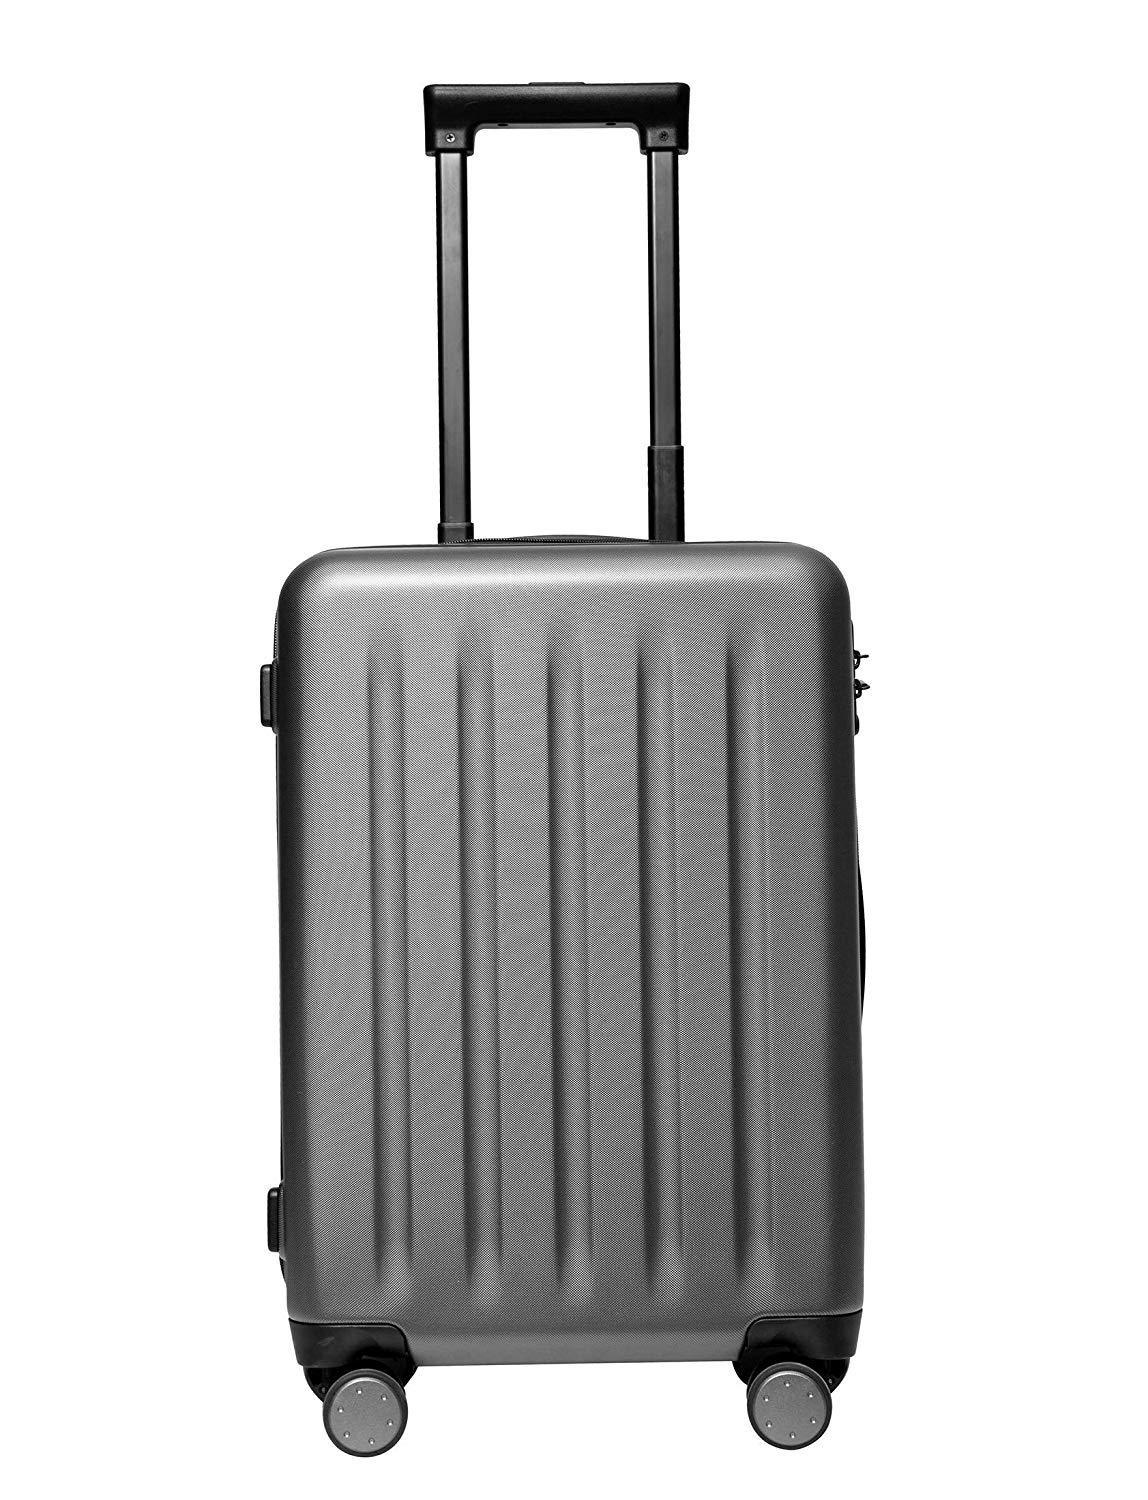 708 lombard soft side cabin luggage black 20 inch trolley bag